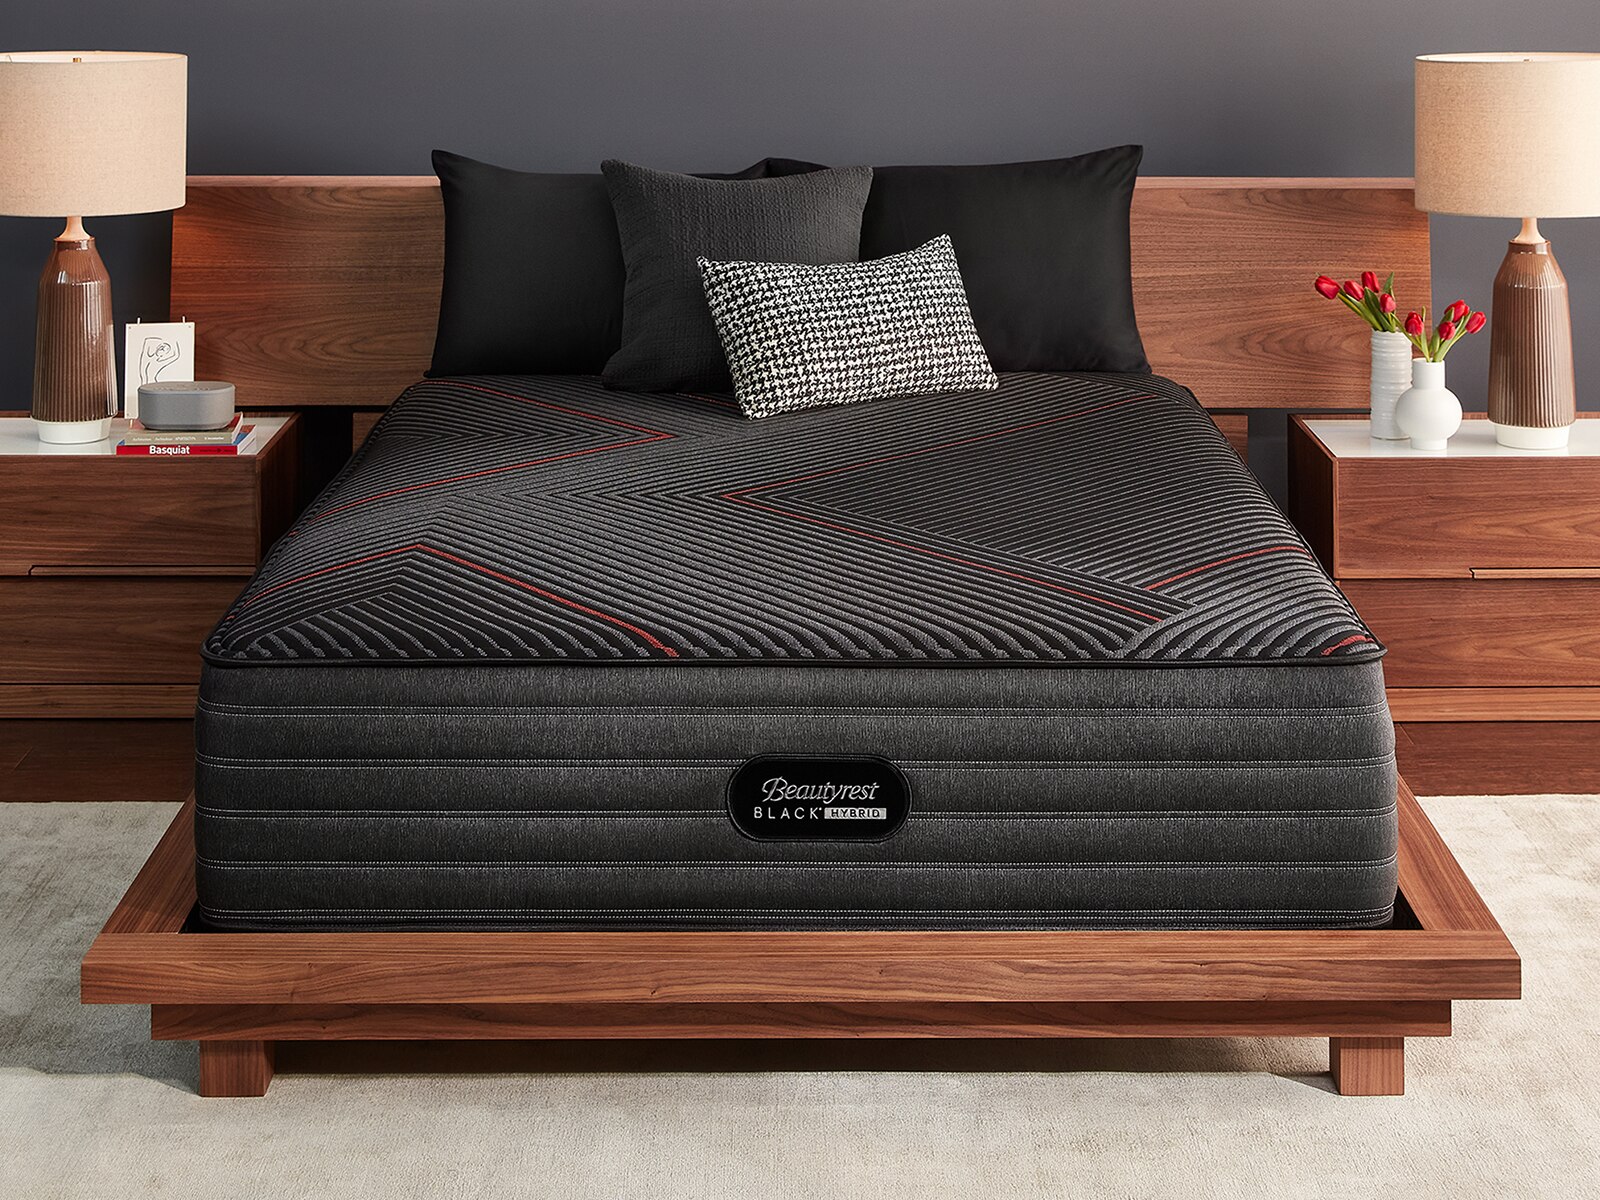 mattress weight limit for beautyrest alcove hybrid